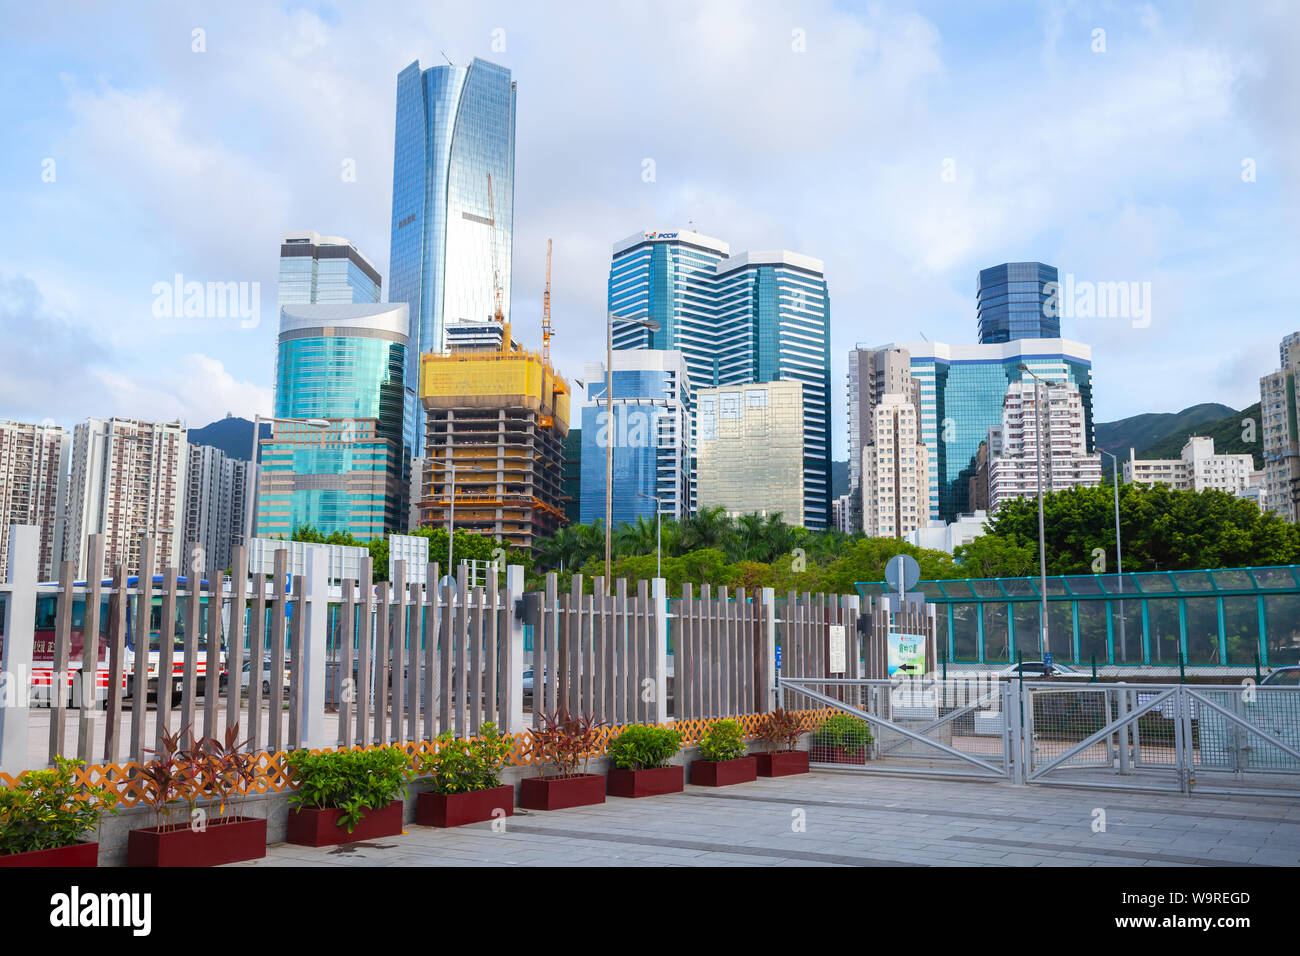 Hongkong - Juli 10, 2017: Stadtbild mit modernen Bürogebäuden an sonnigen Tag, die Skyline von Hong Kong Stockfoto